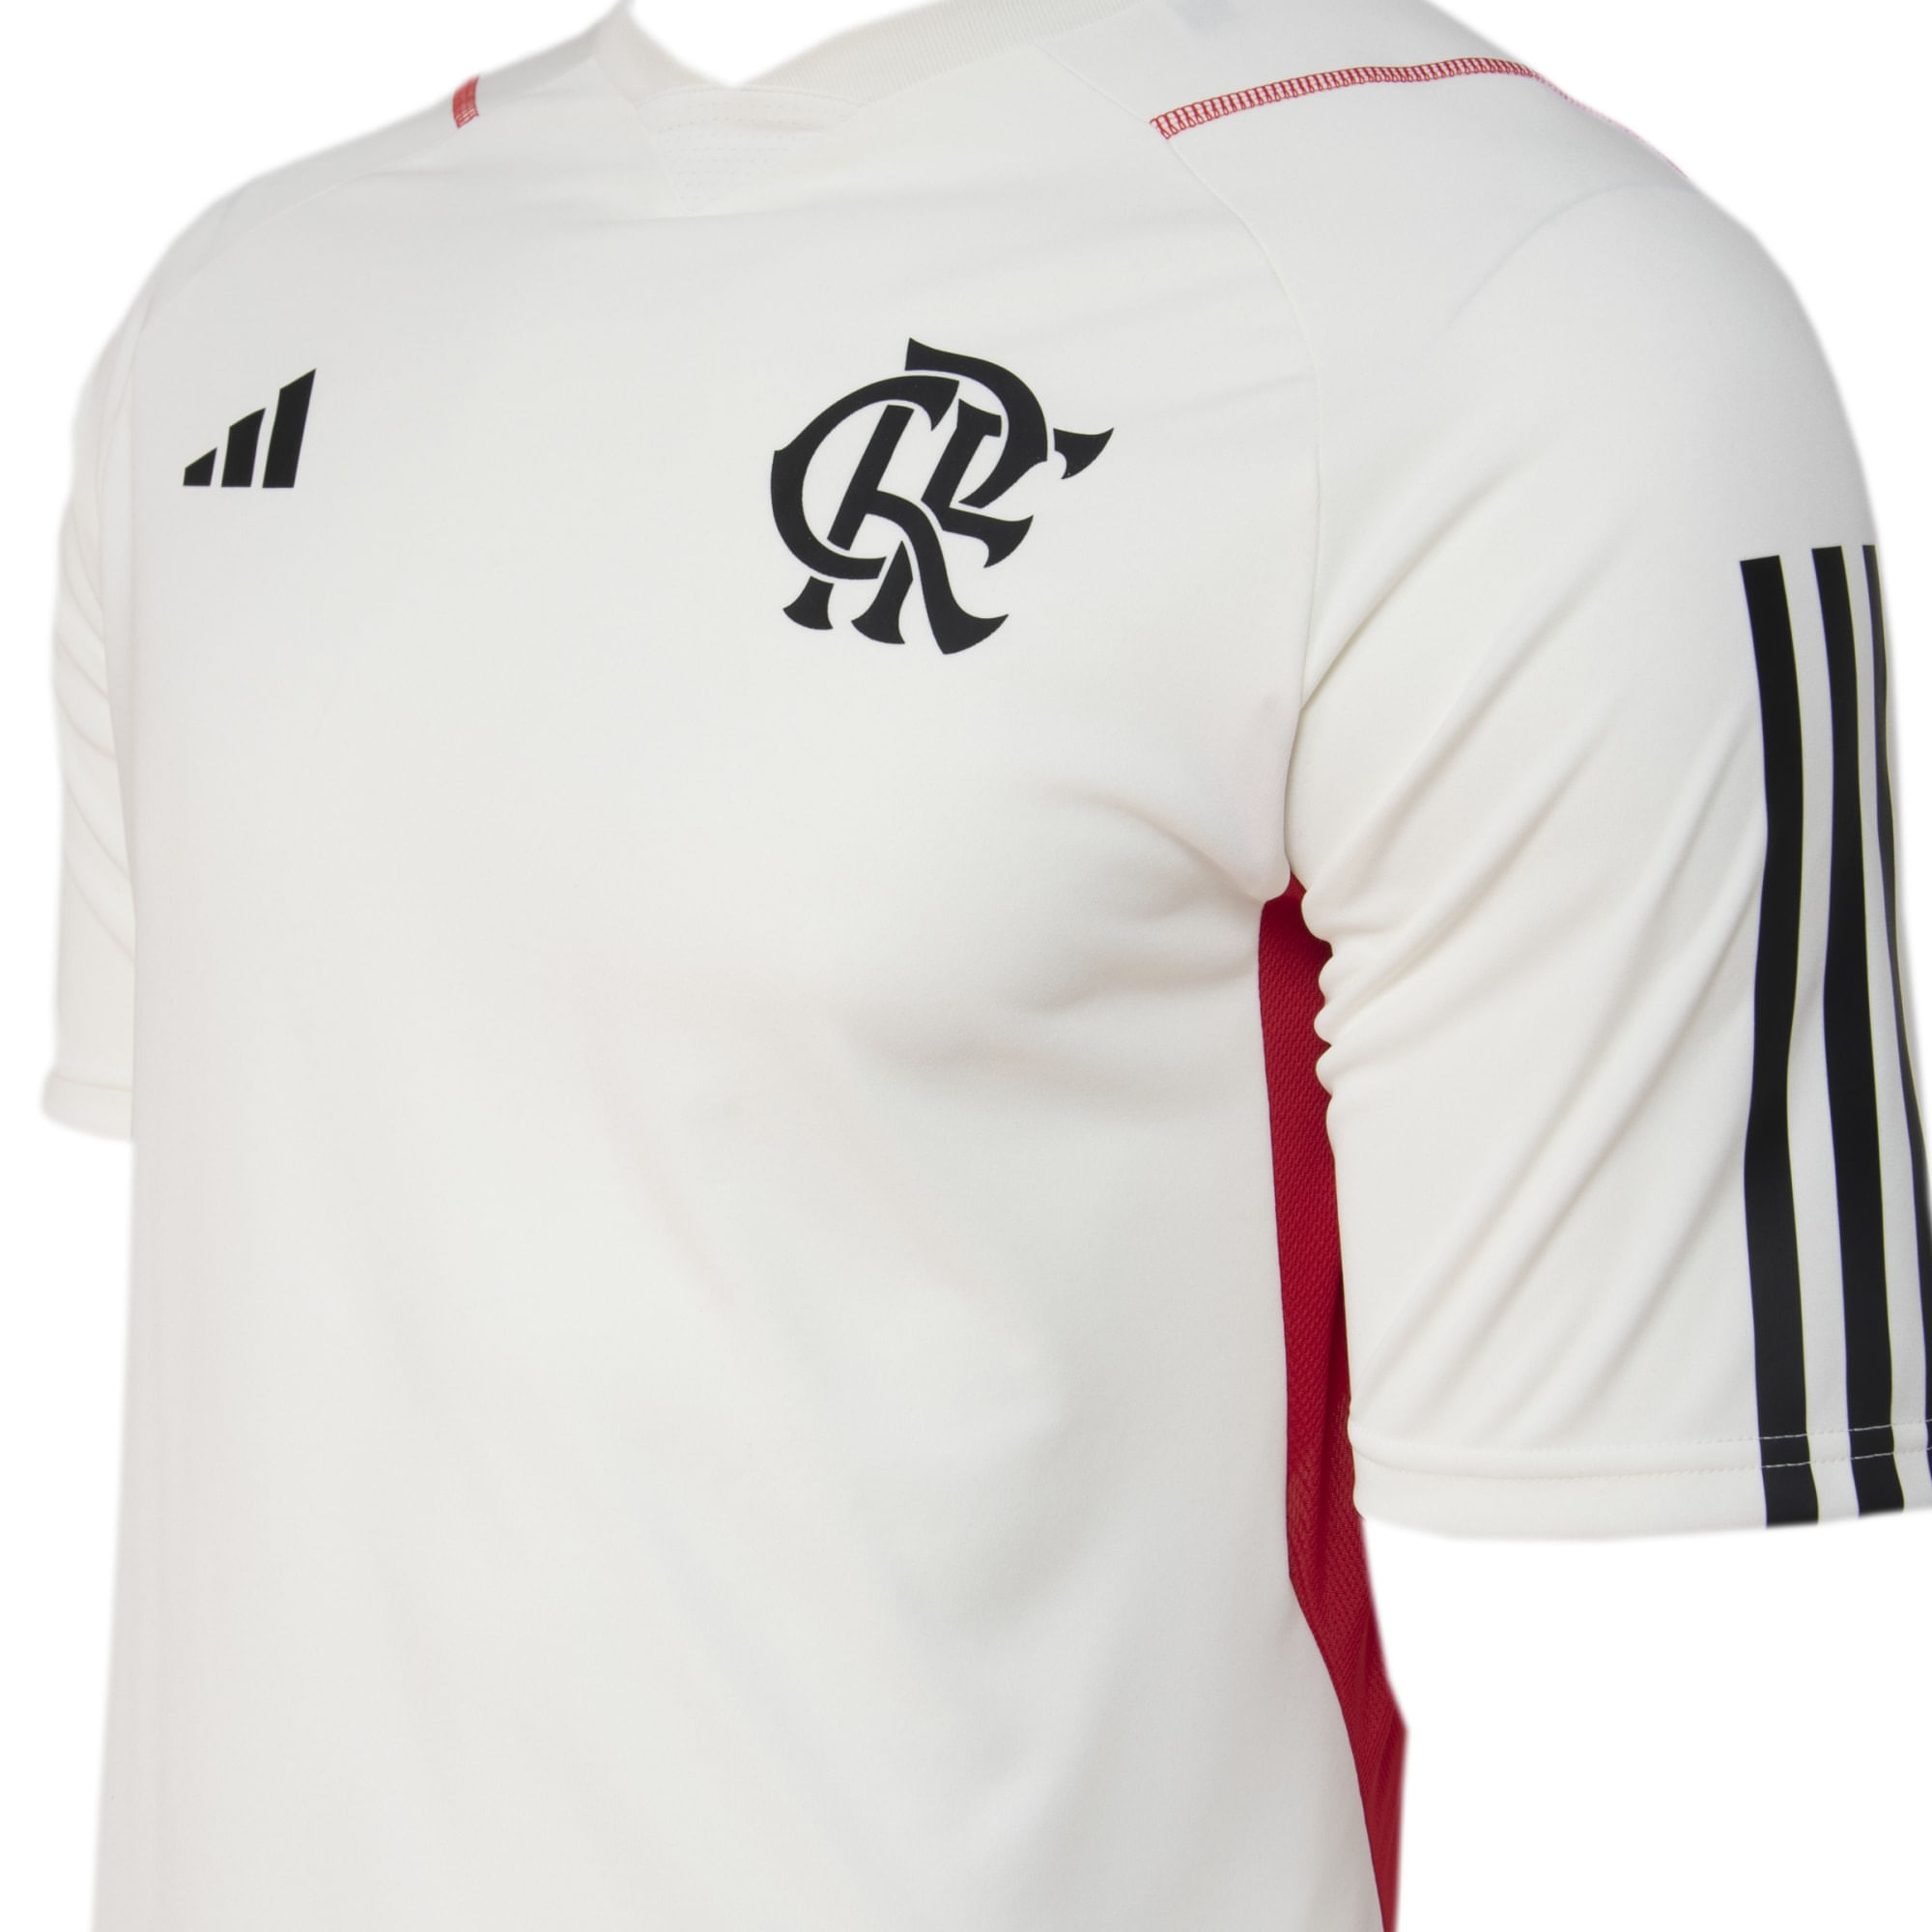 Camisa Flamengo All Black 2023 - Corre de Londrina